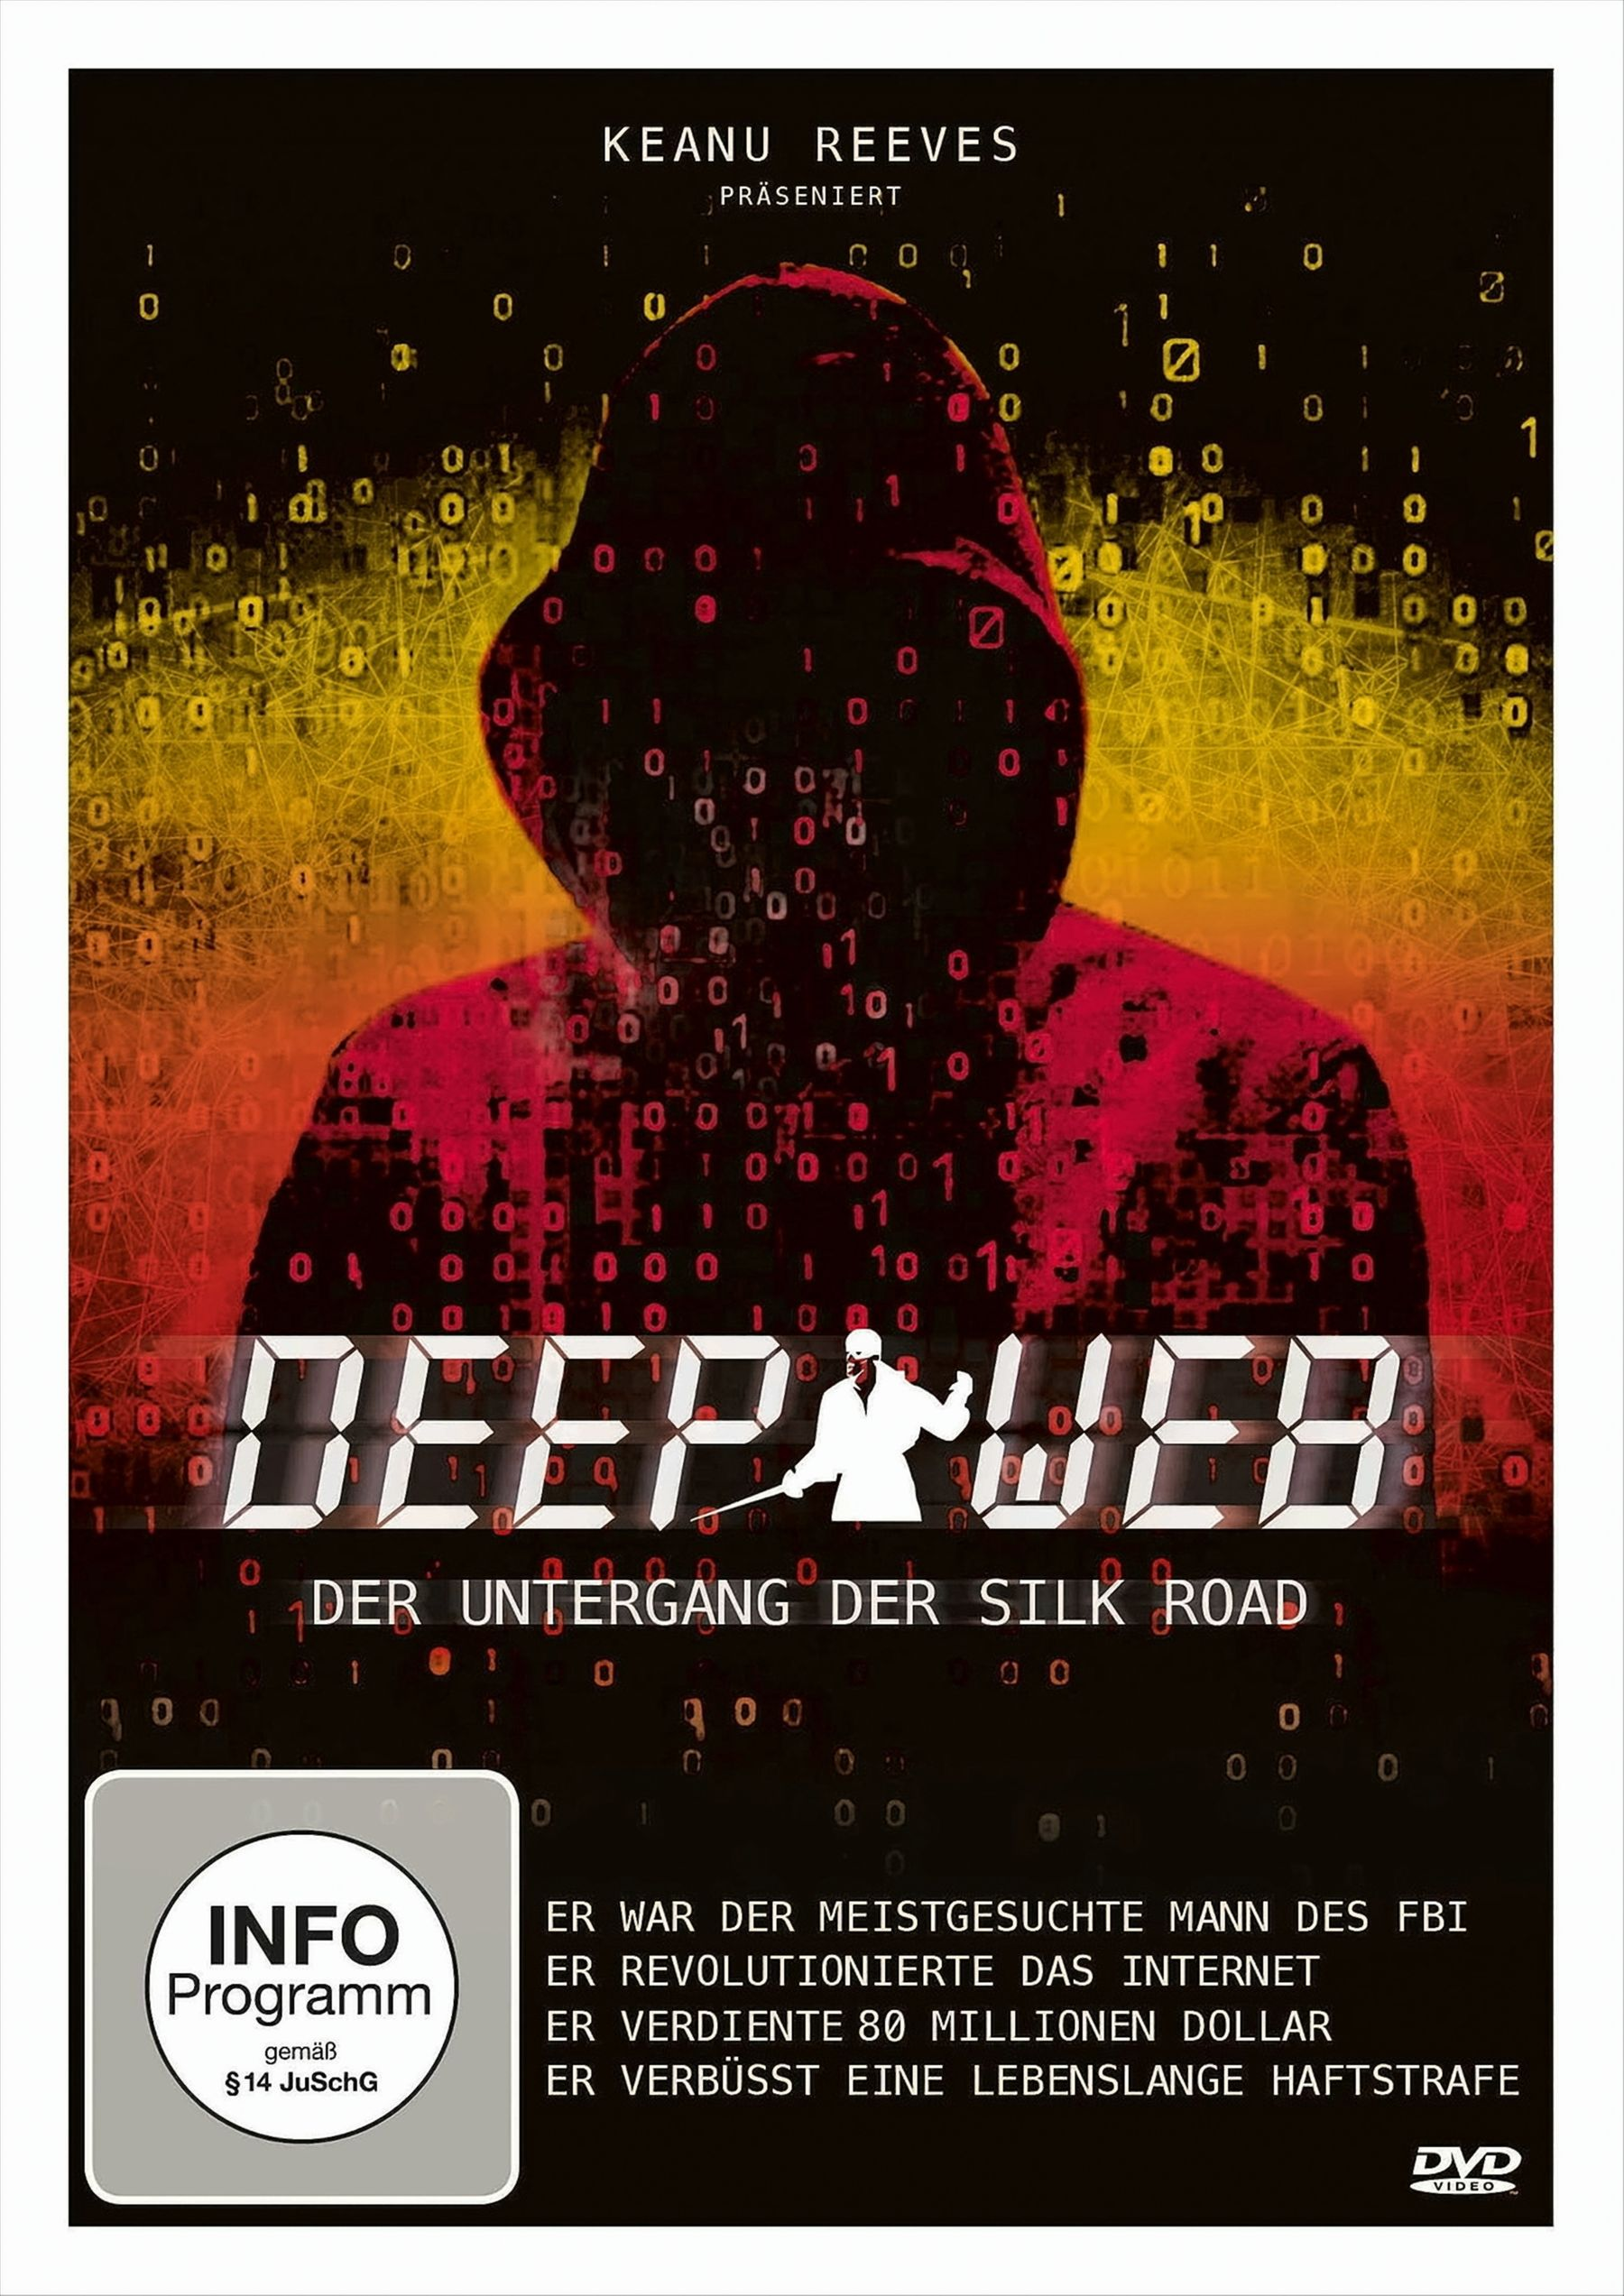 Deep Web Road - Der Untergang der DVD Silk